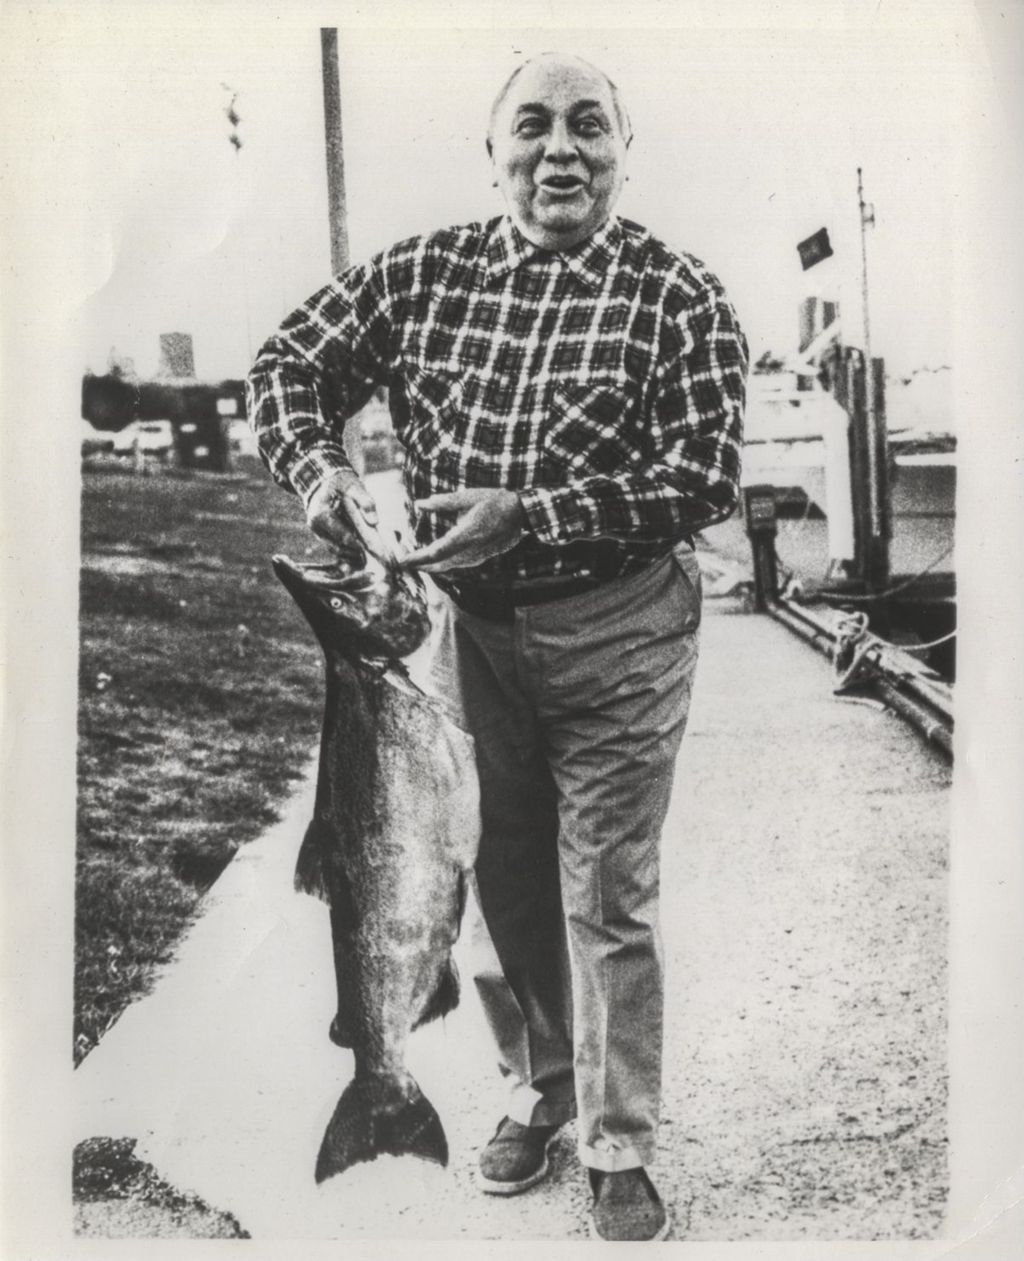 Miniature of Richard J. Daley holding a coho salmon